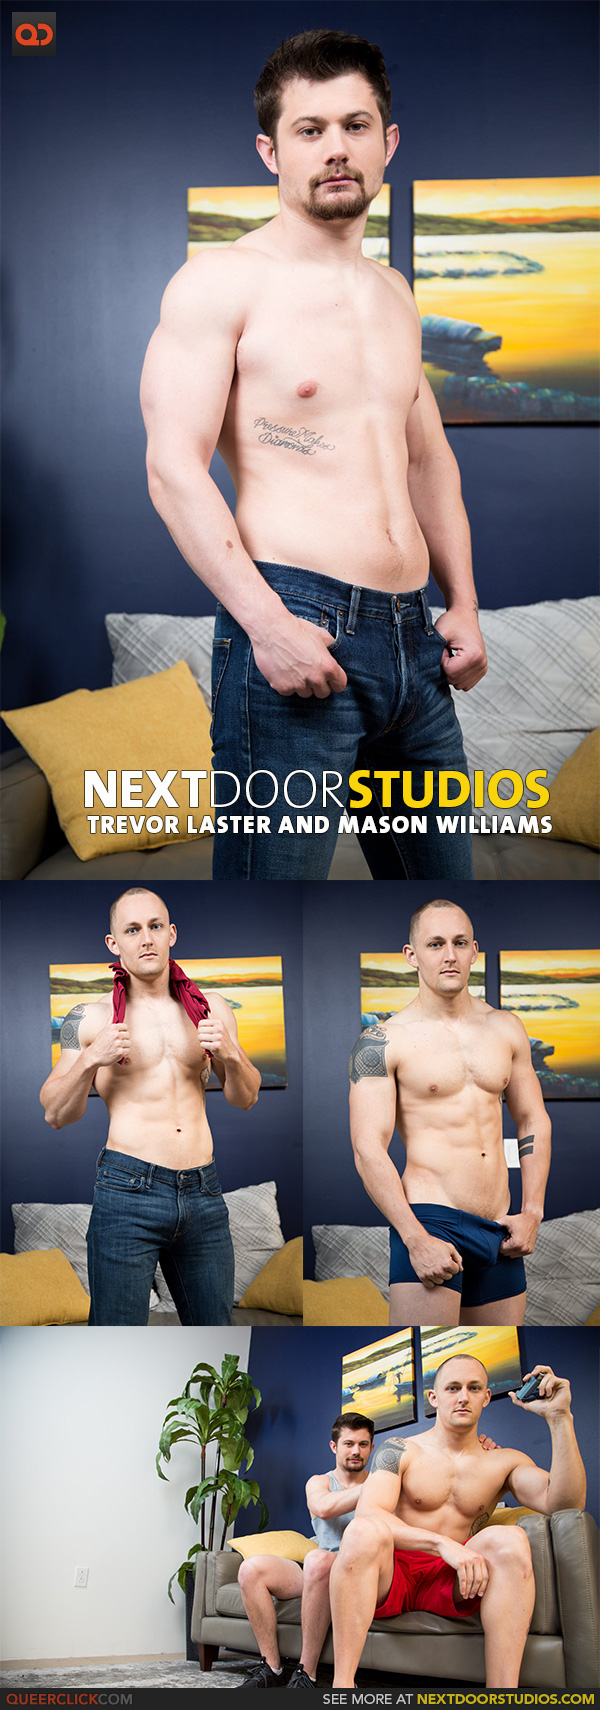 Next Door Studios:  Trevor Laster and Mason Williams